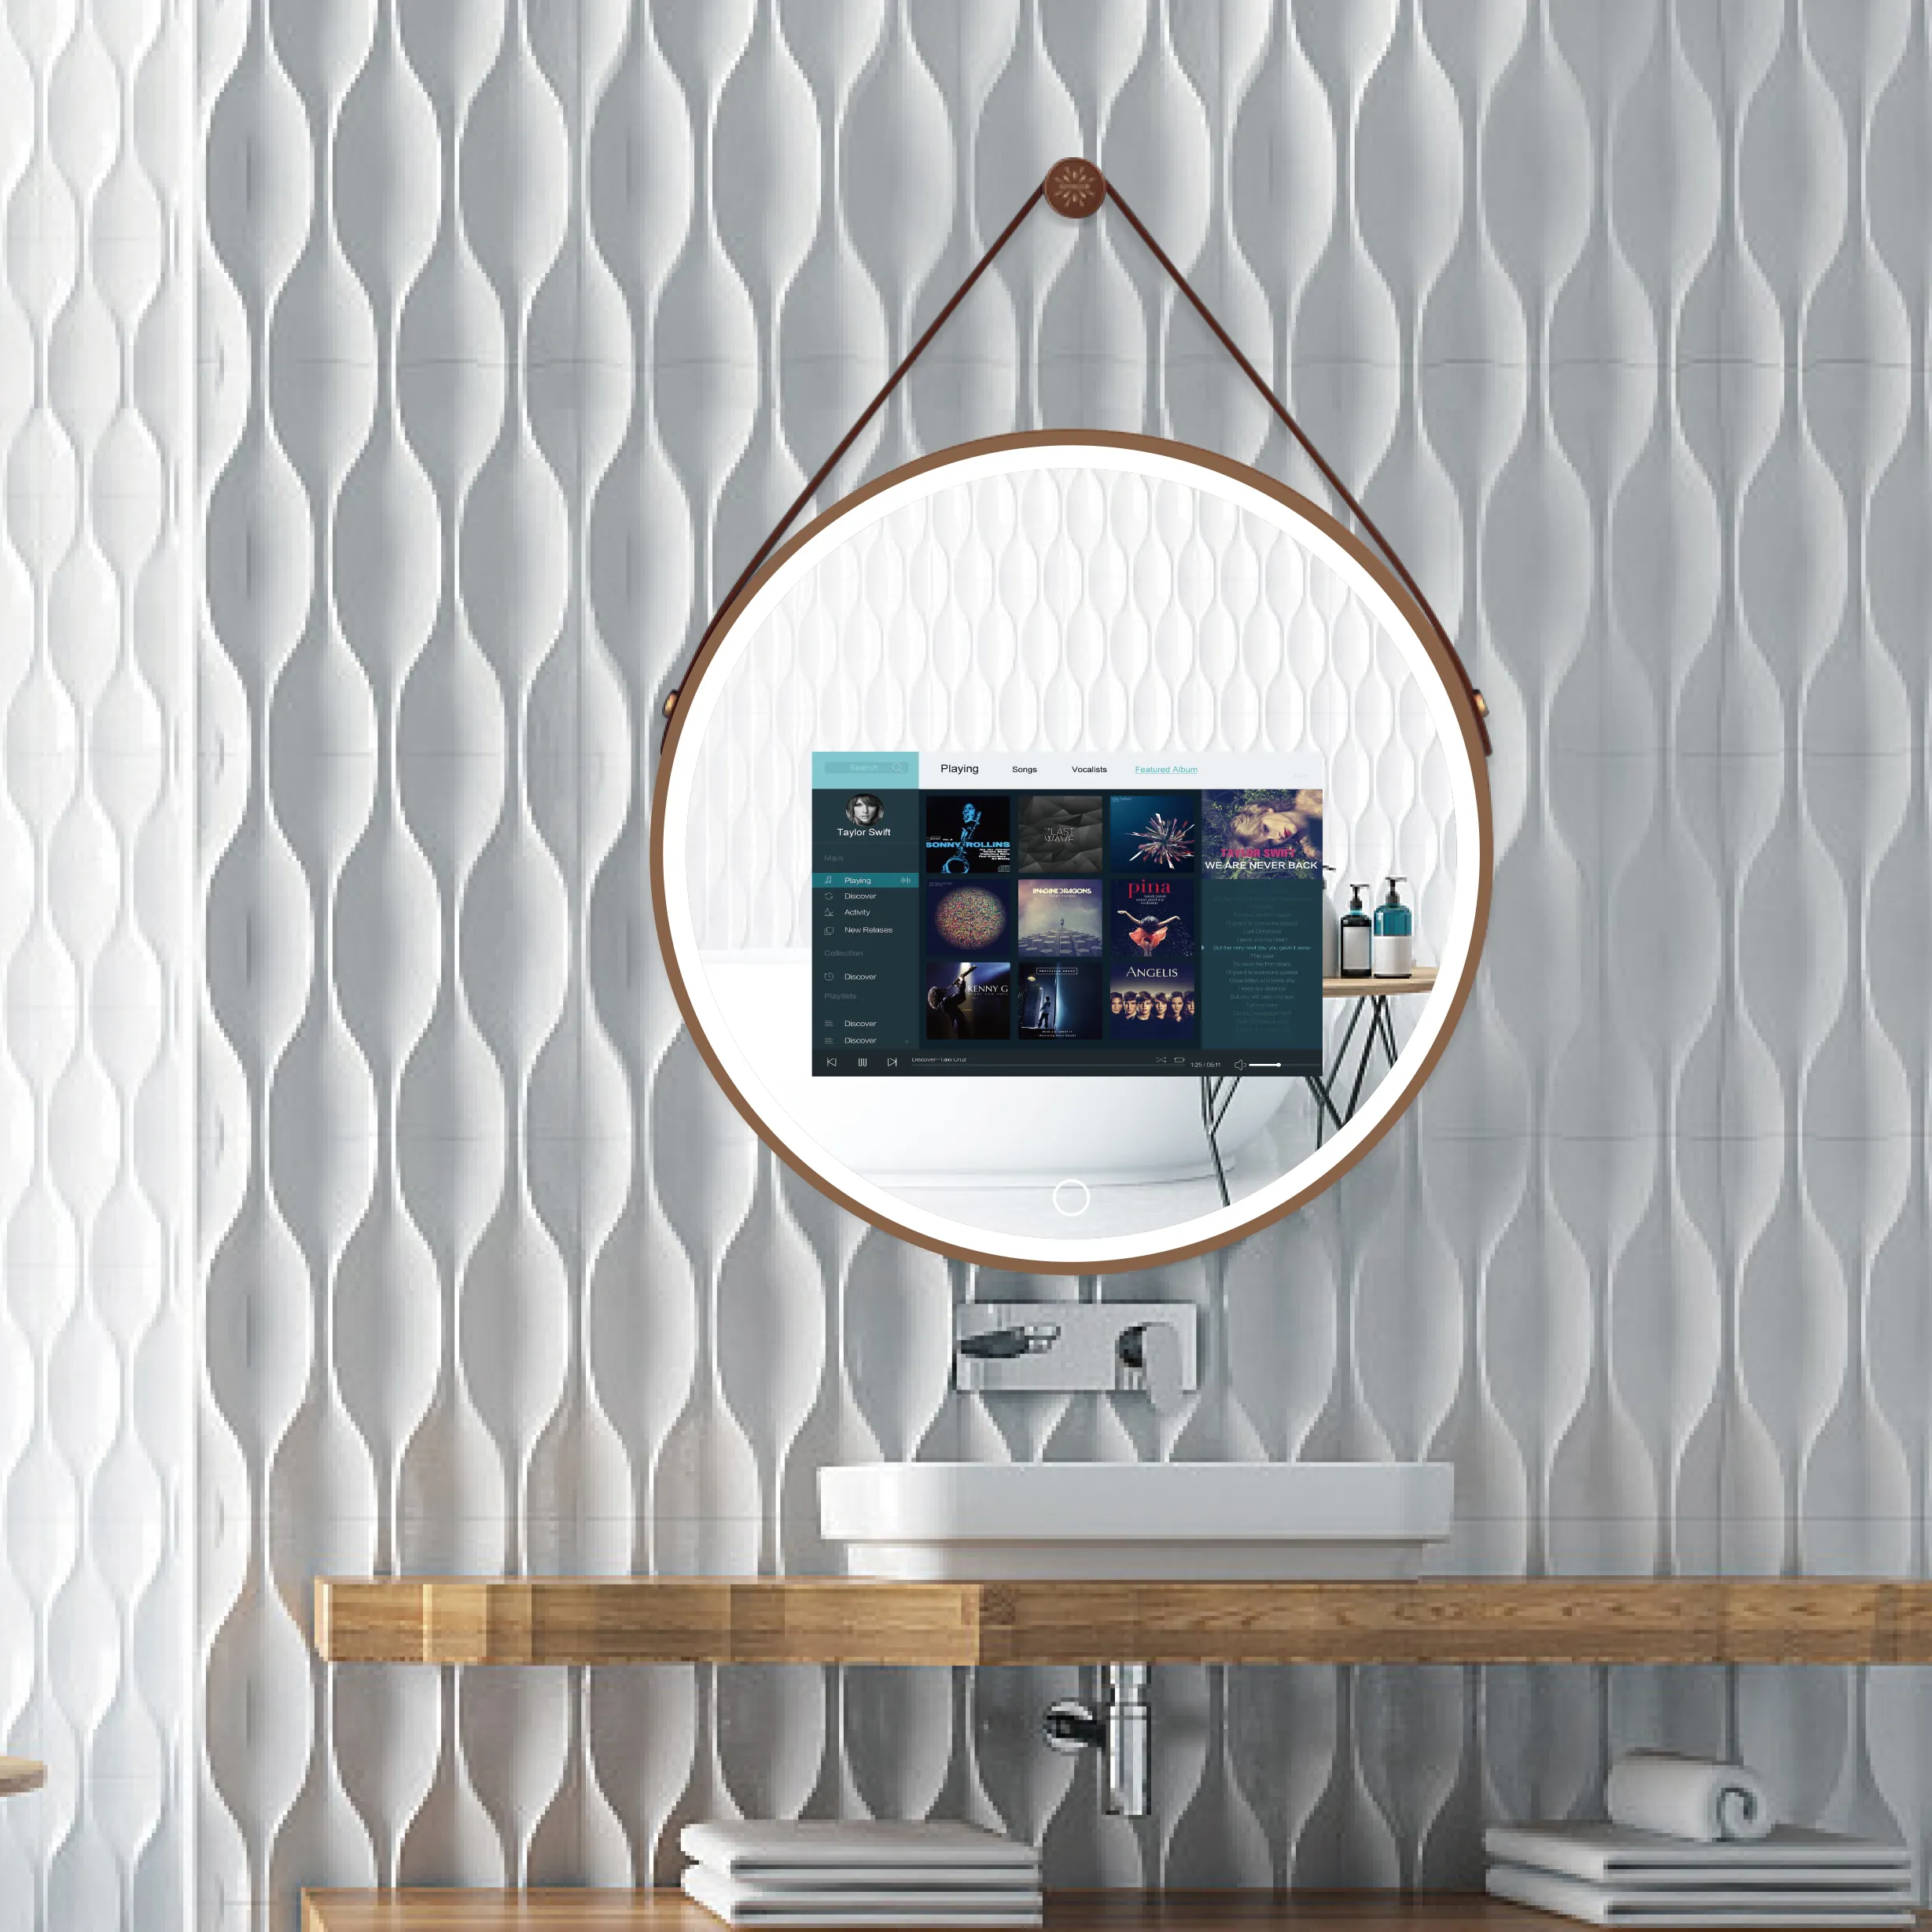 थोक होटल घर टच स्क्रीन स्मार्ट निविड़ अंधकार बाथरूम दर्पण टीवी